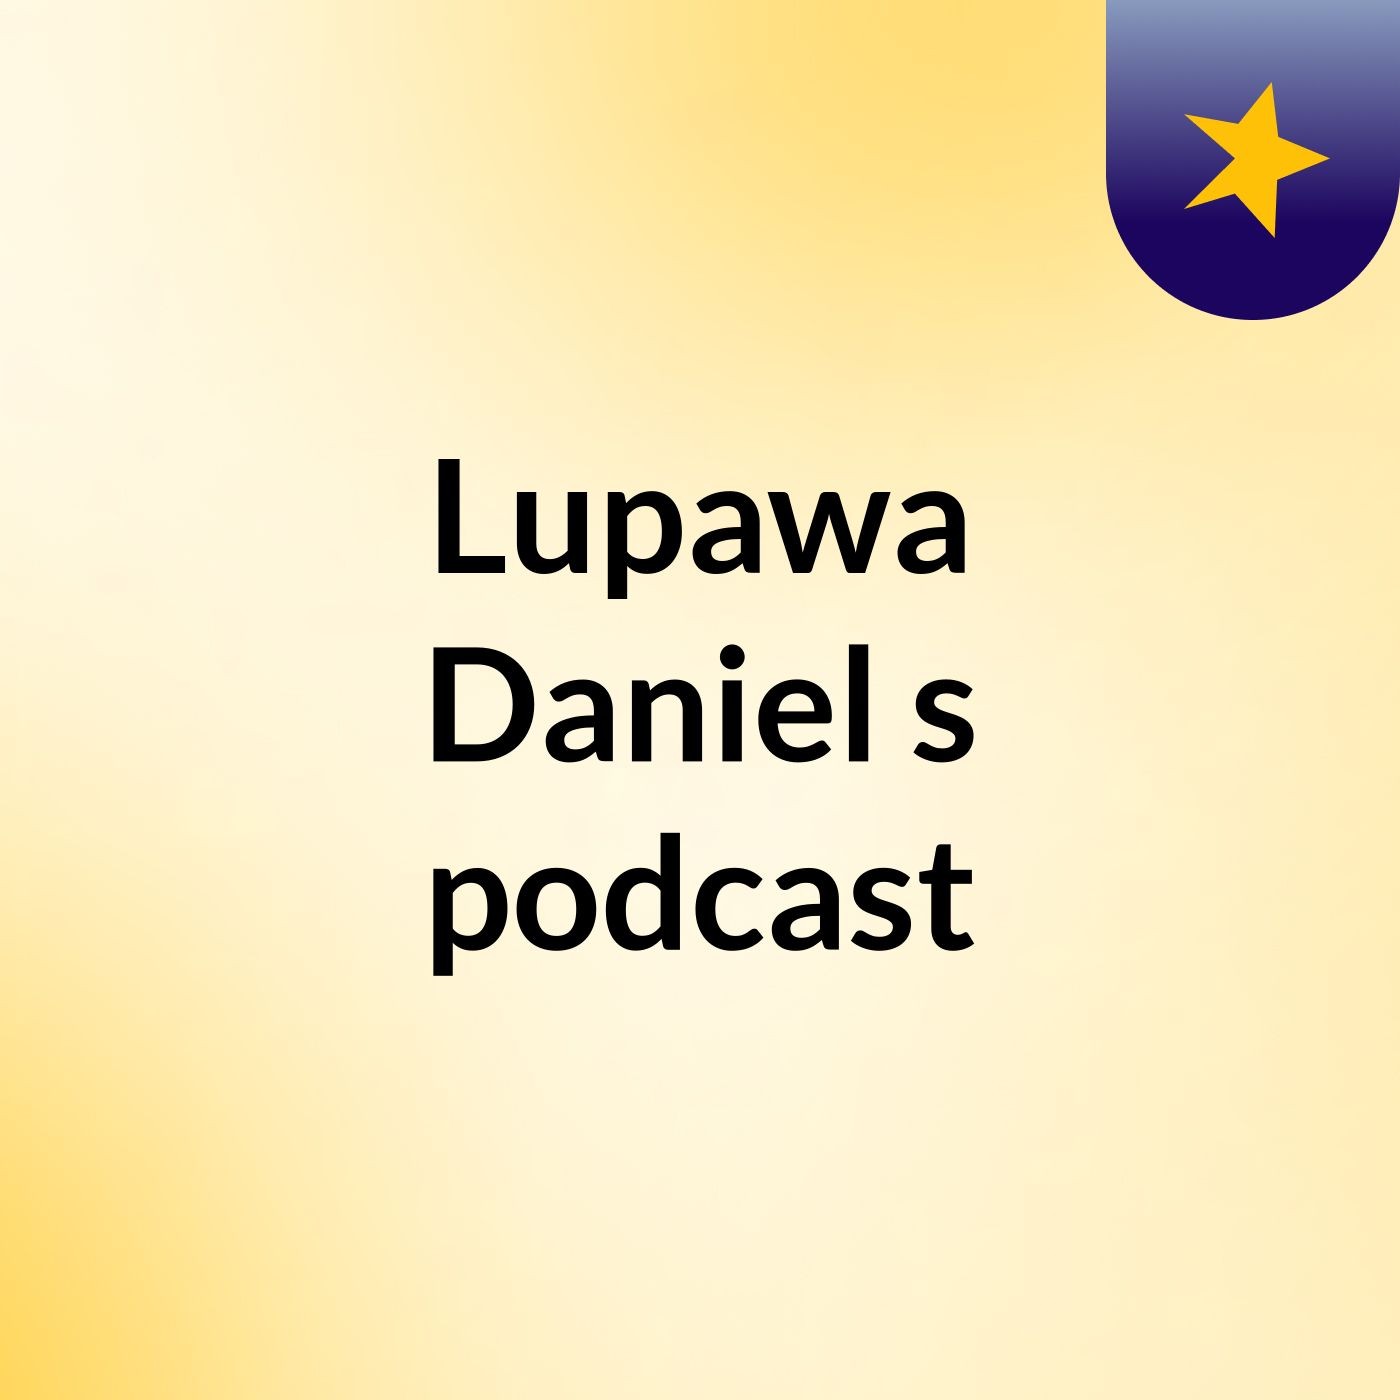 Episode 6 - Lupawa Daniel's podcast